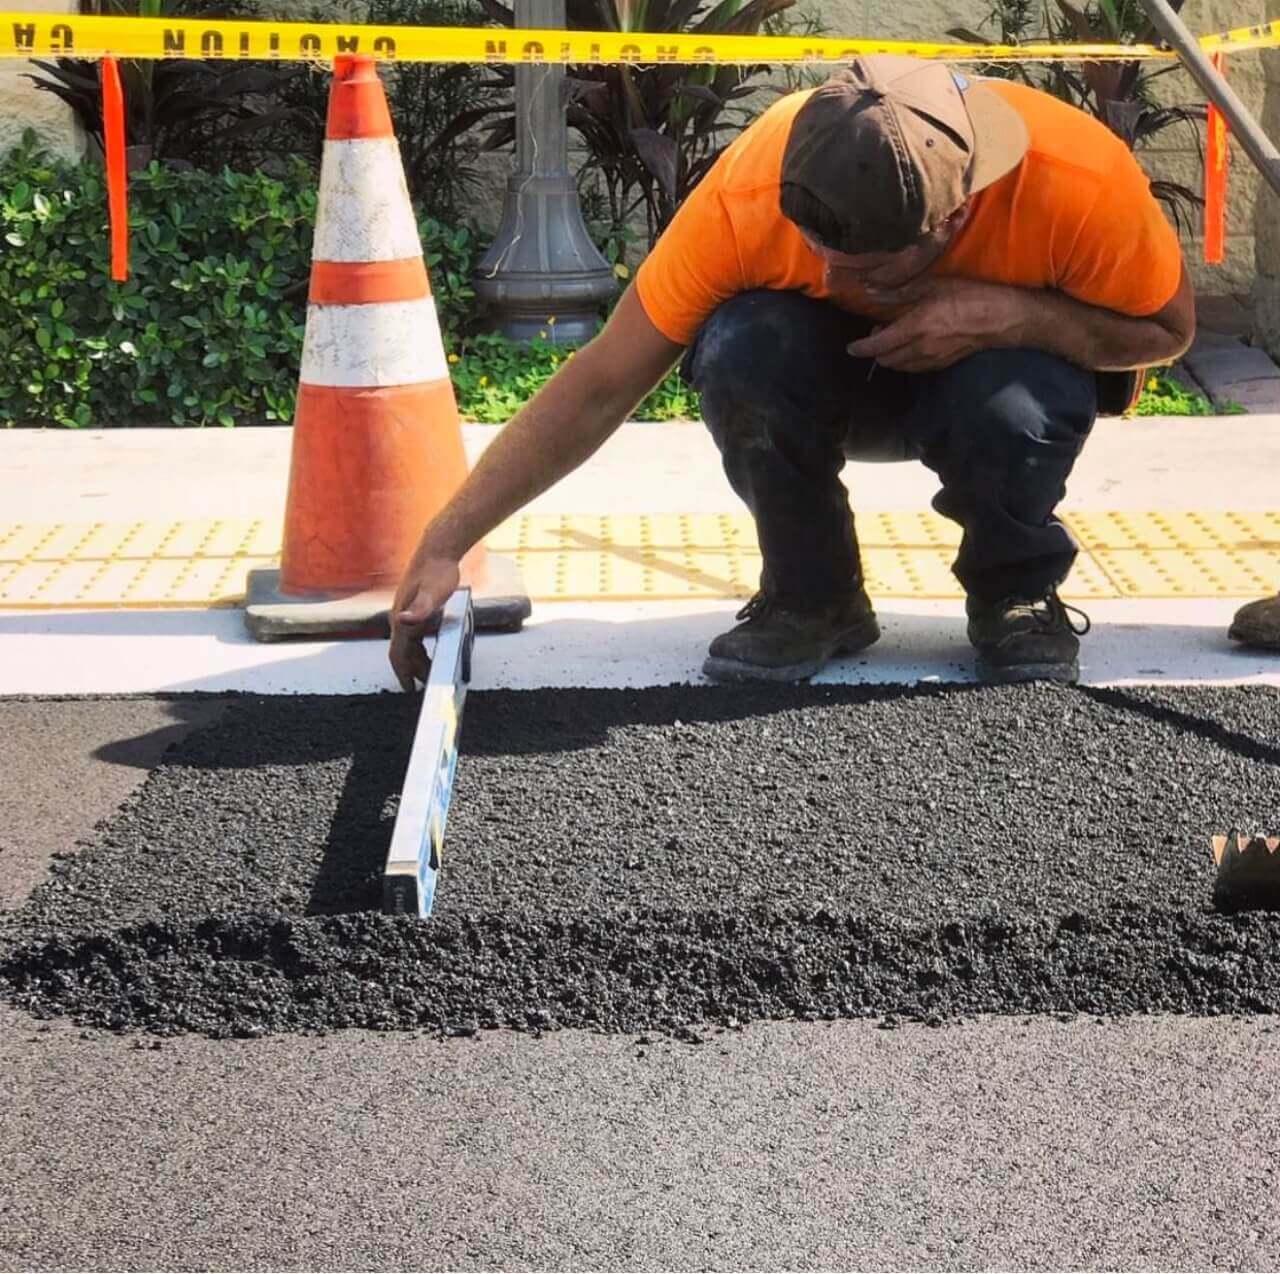 PaveCo National asphalt paving